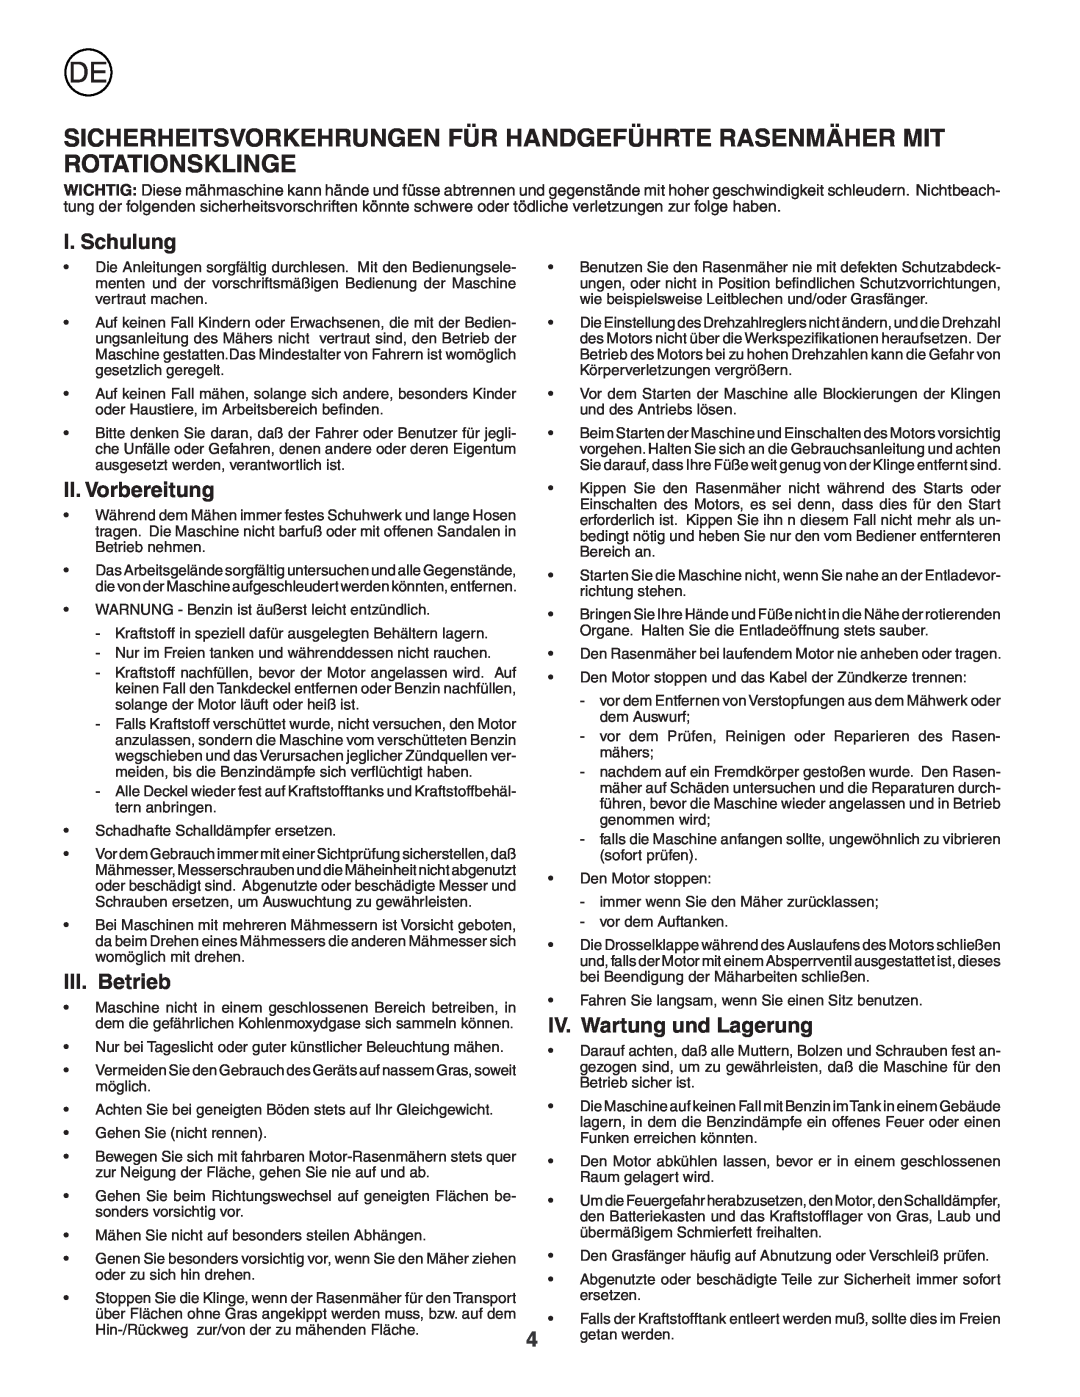 Husqvarna J50S instruction manual I. Schulung, II. Vorbereitung, III. Betrieb, IV. Wartung und Lagerung 